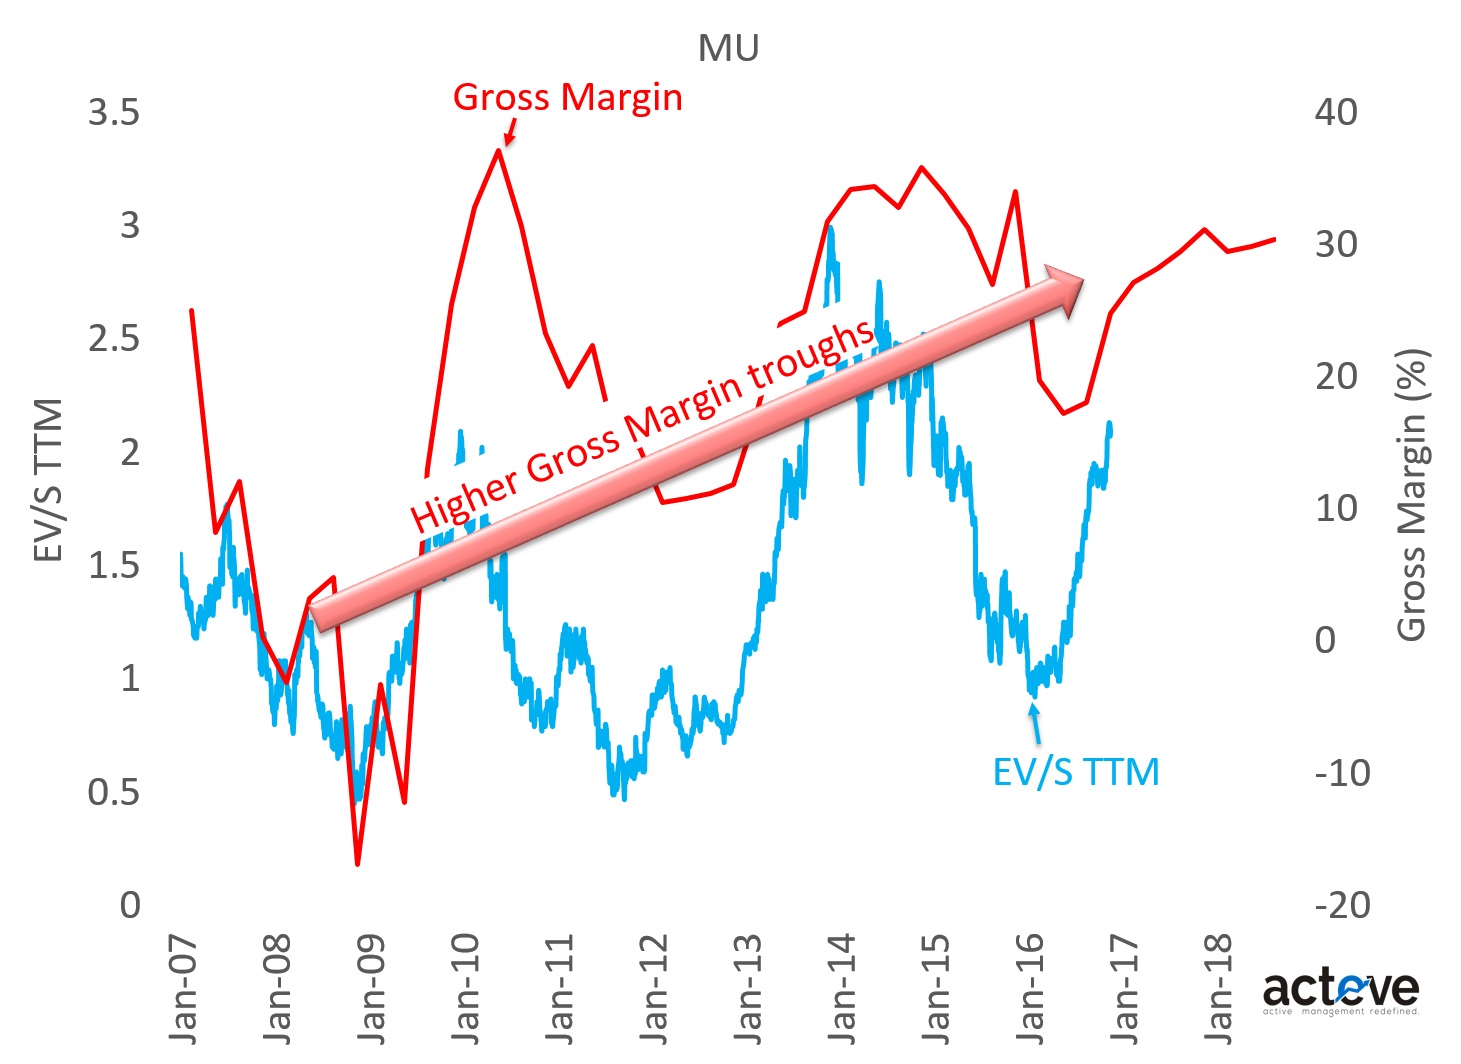 MU EV/S TTM vs. Gross Margins as of 11/30/16